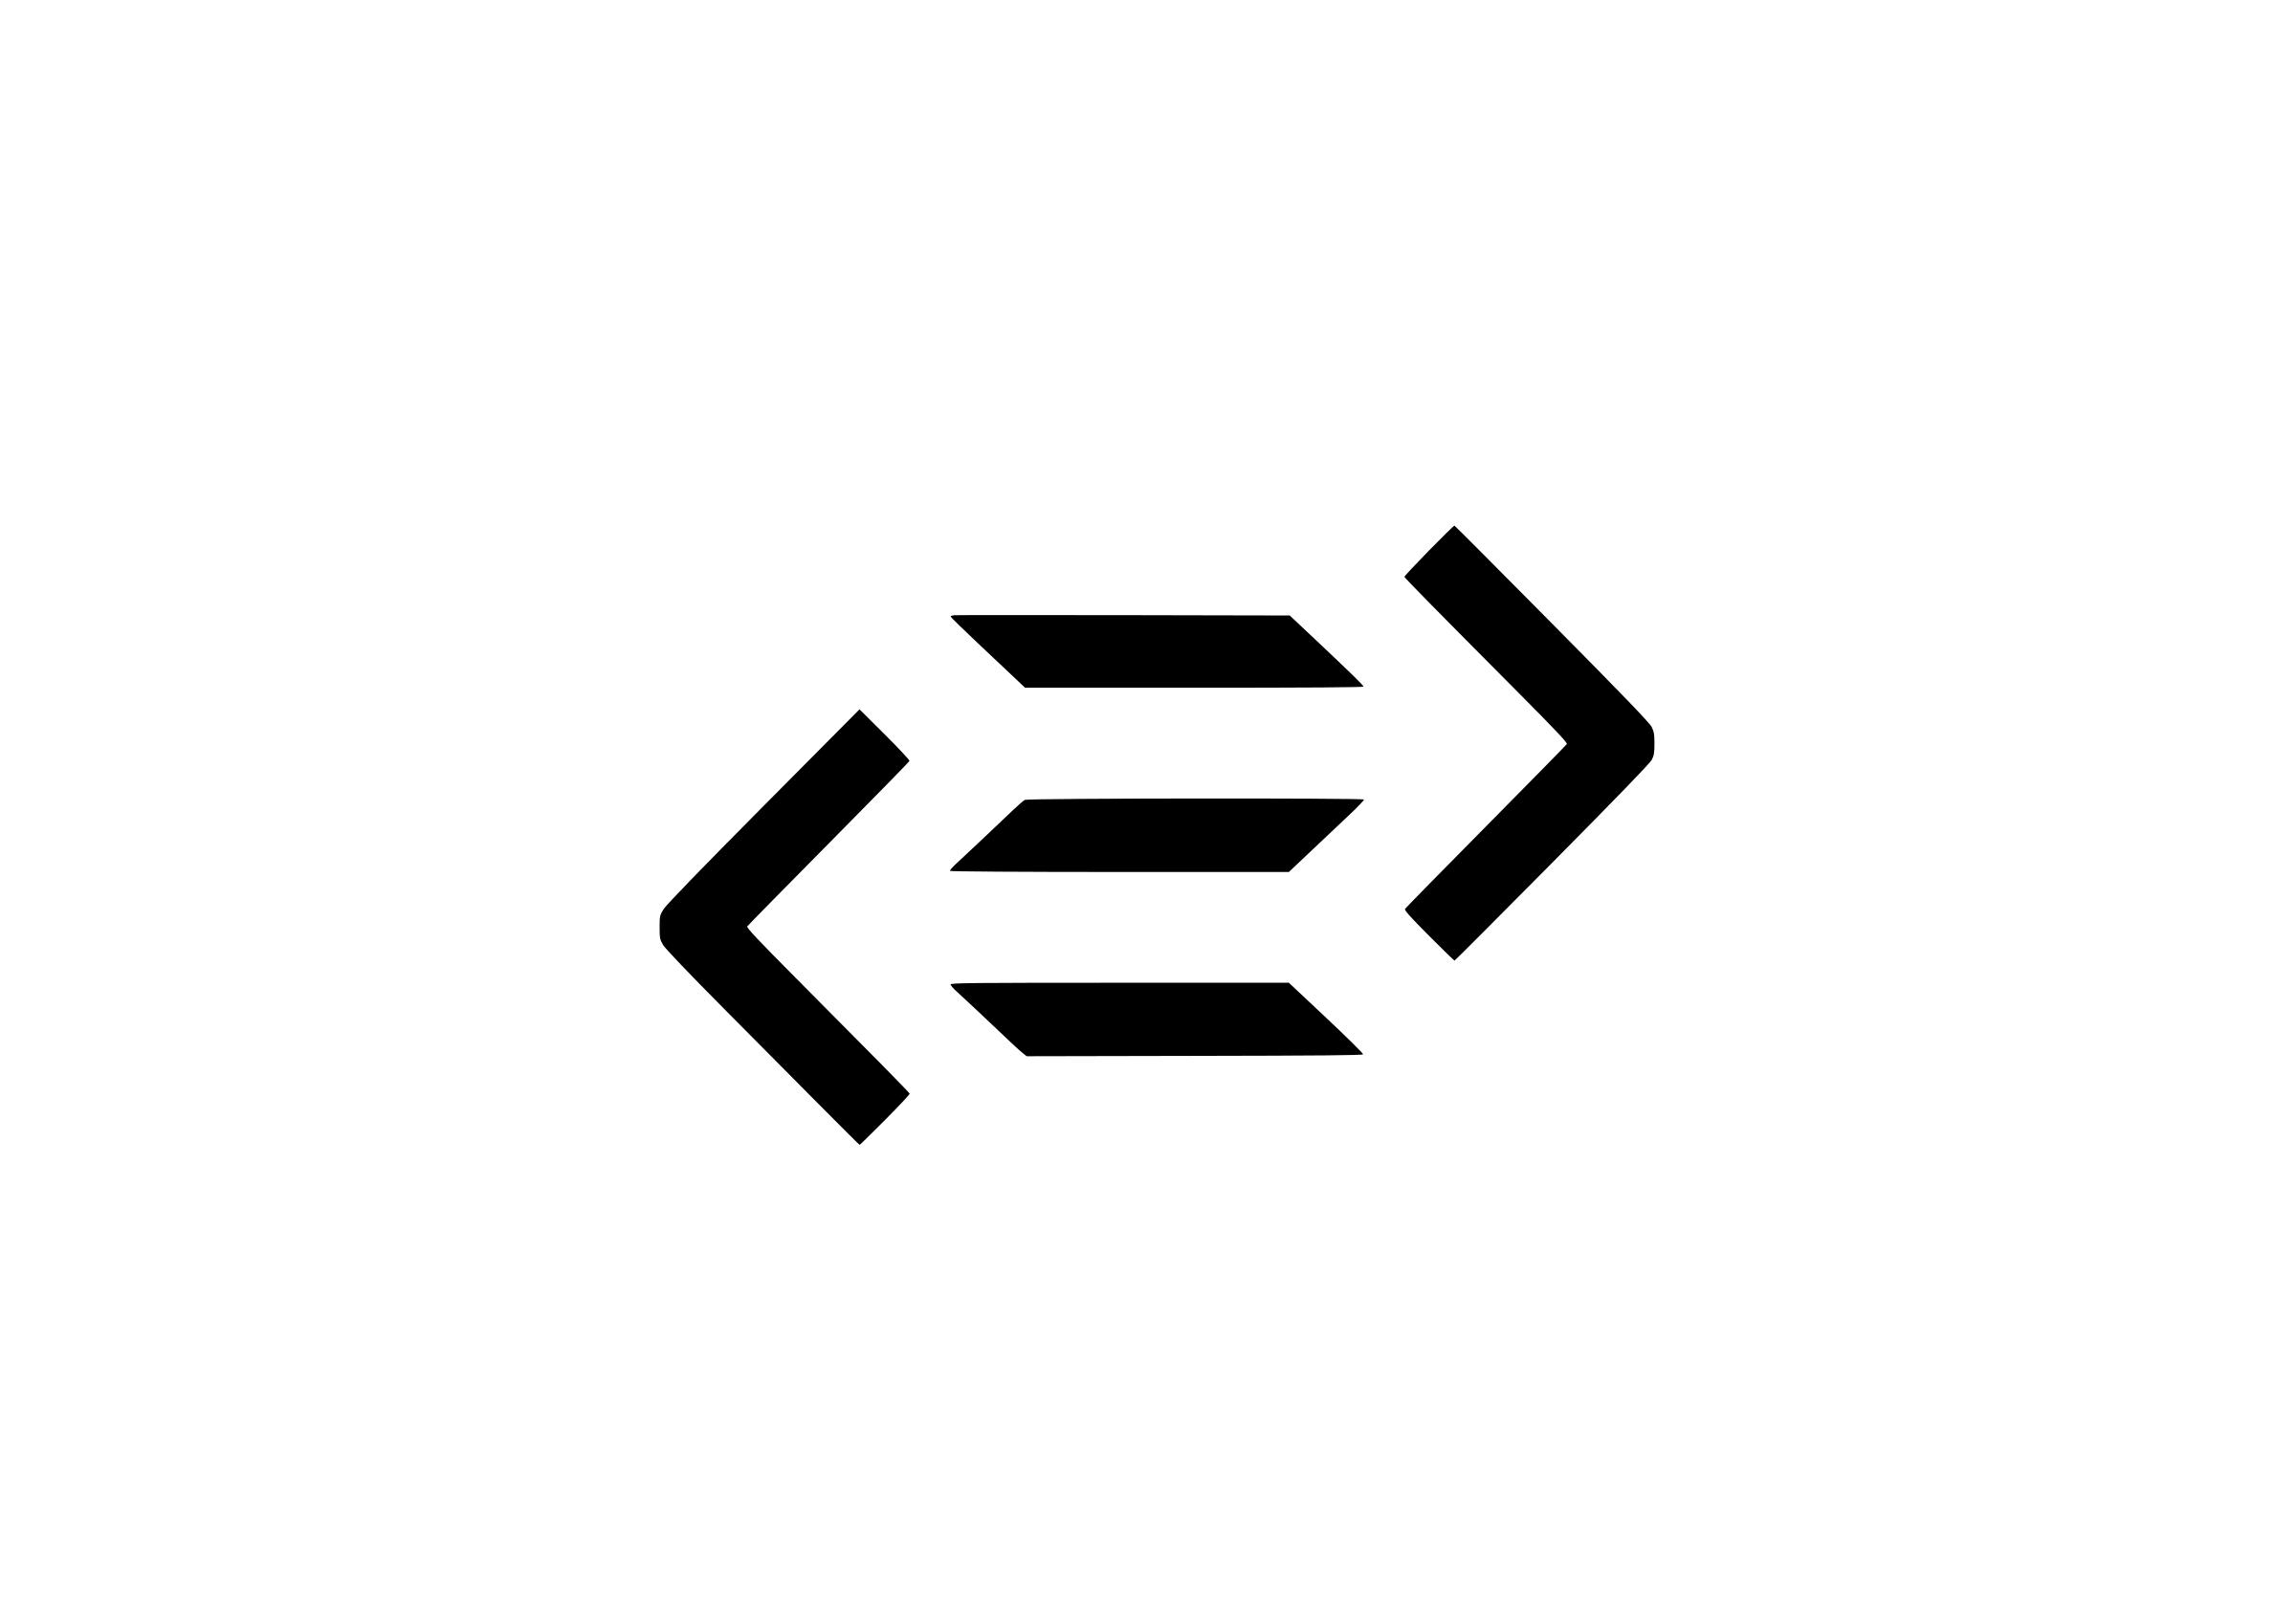 purescript logo icons